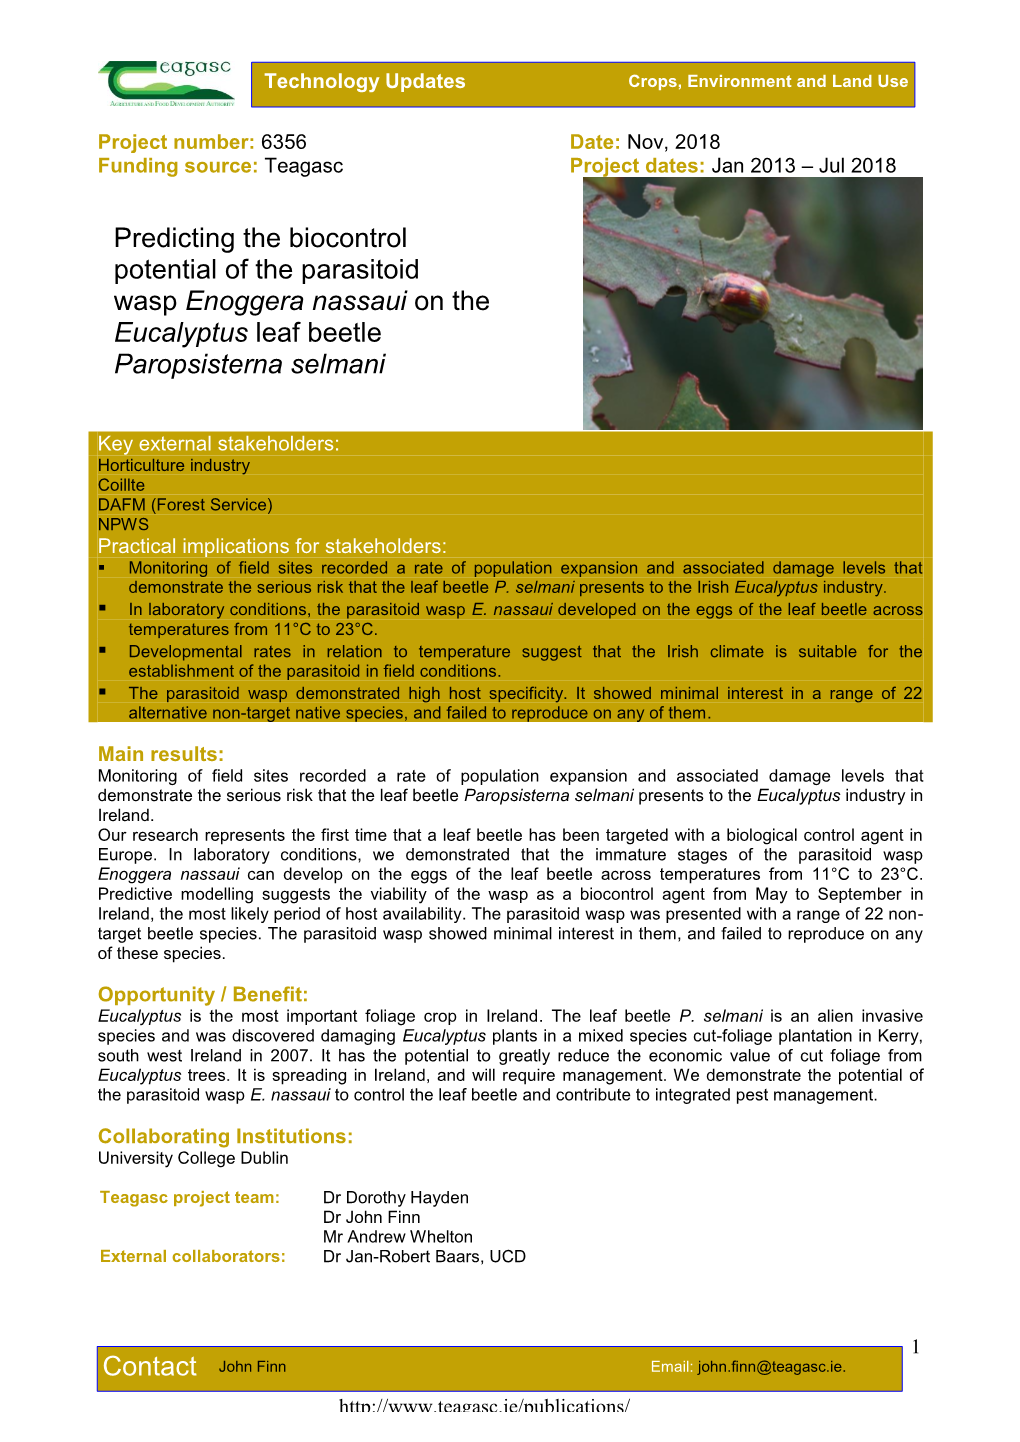 Predicting the Biocontrol Potential of the Parasitoid Wasp Enoggera Nassaui on the Eucalyptus Leaf Beetle Paropsisterna Selmani